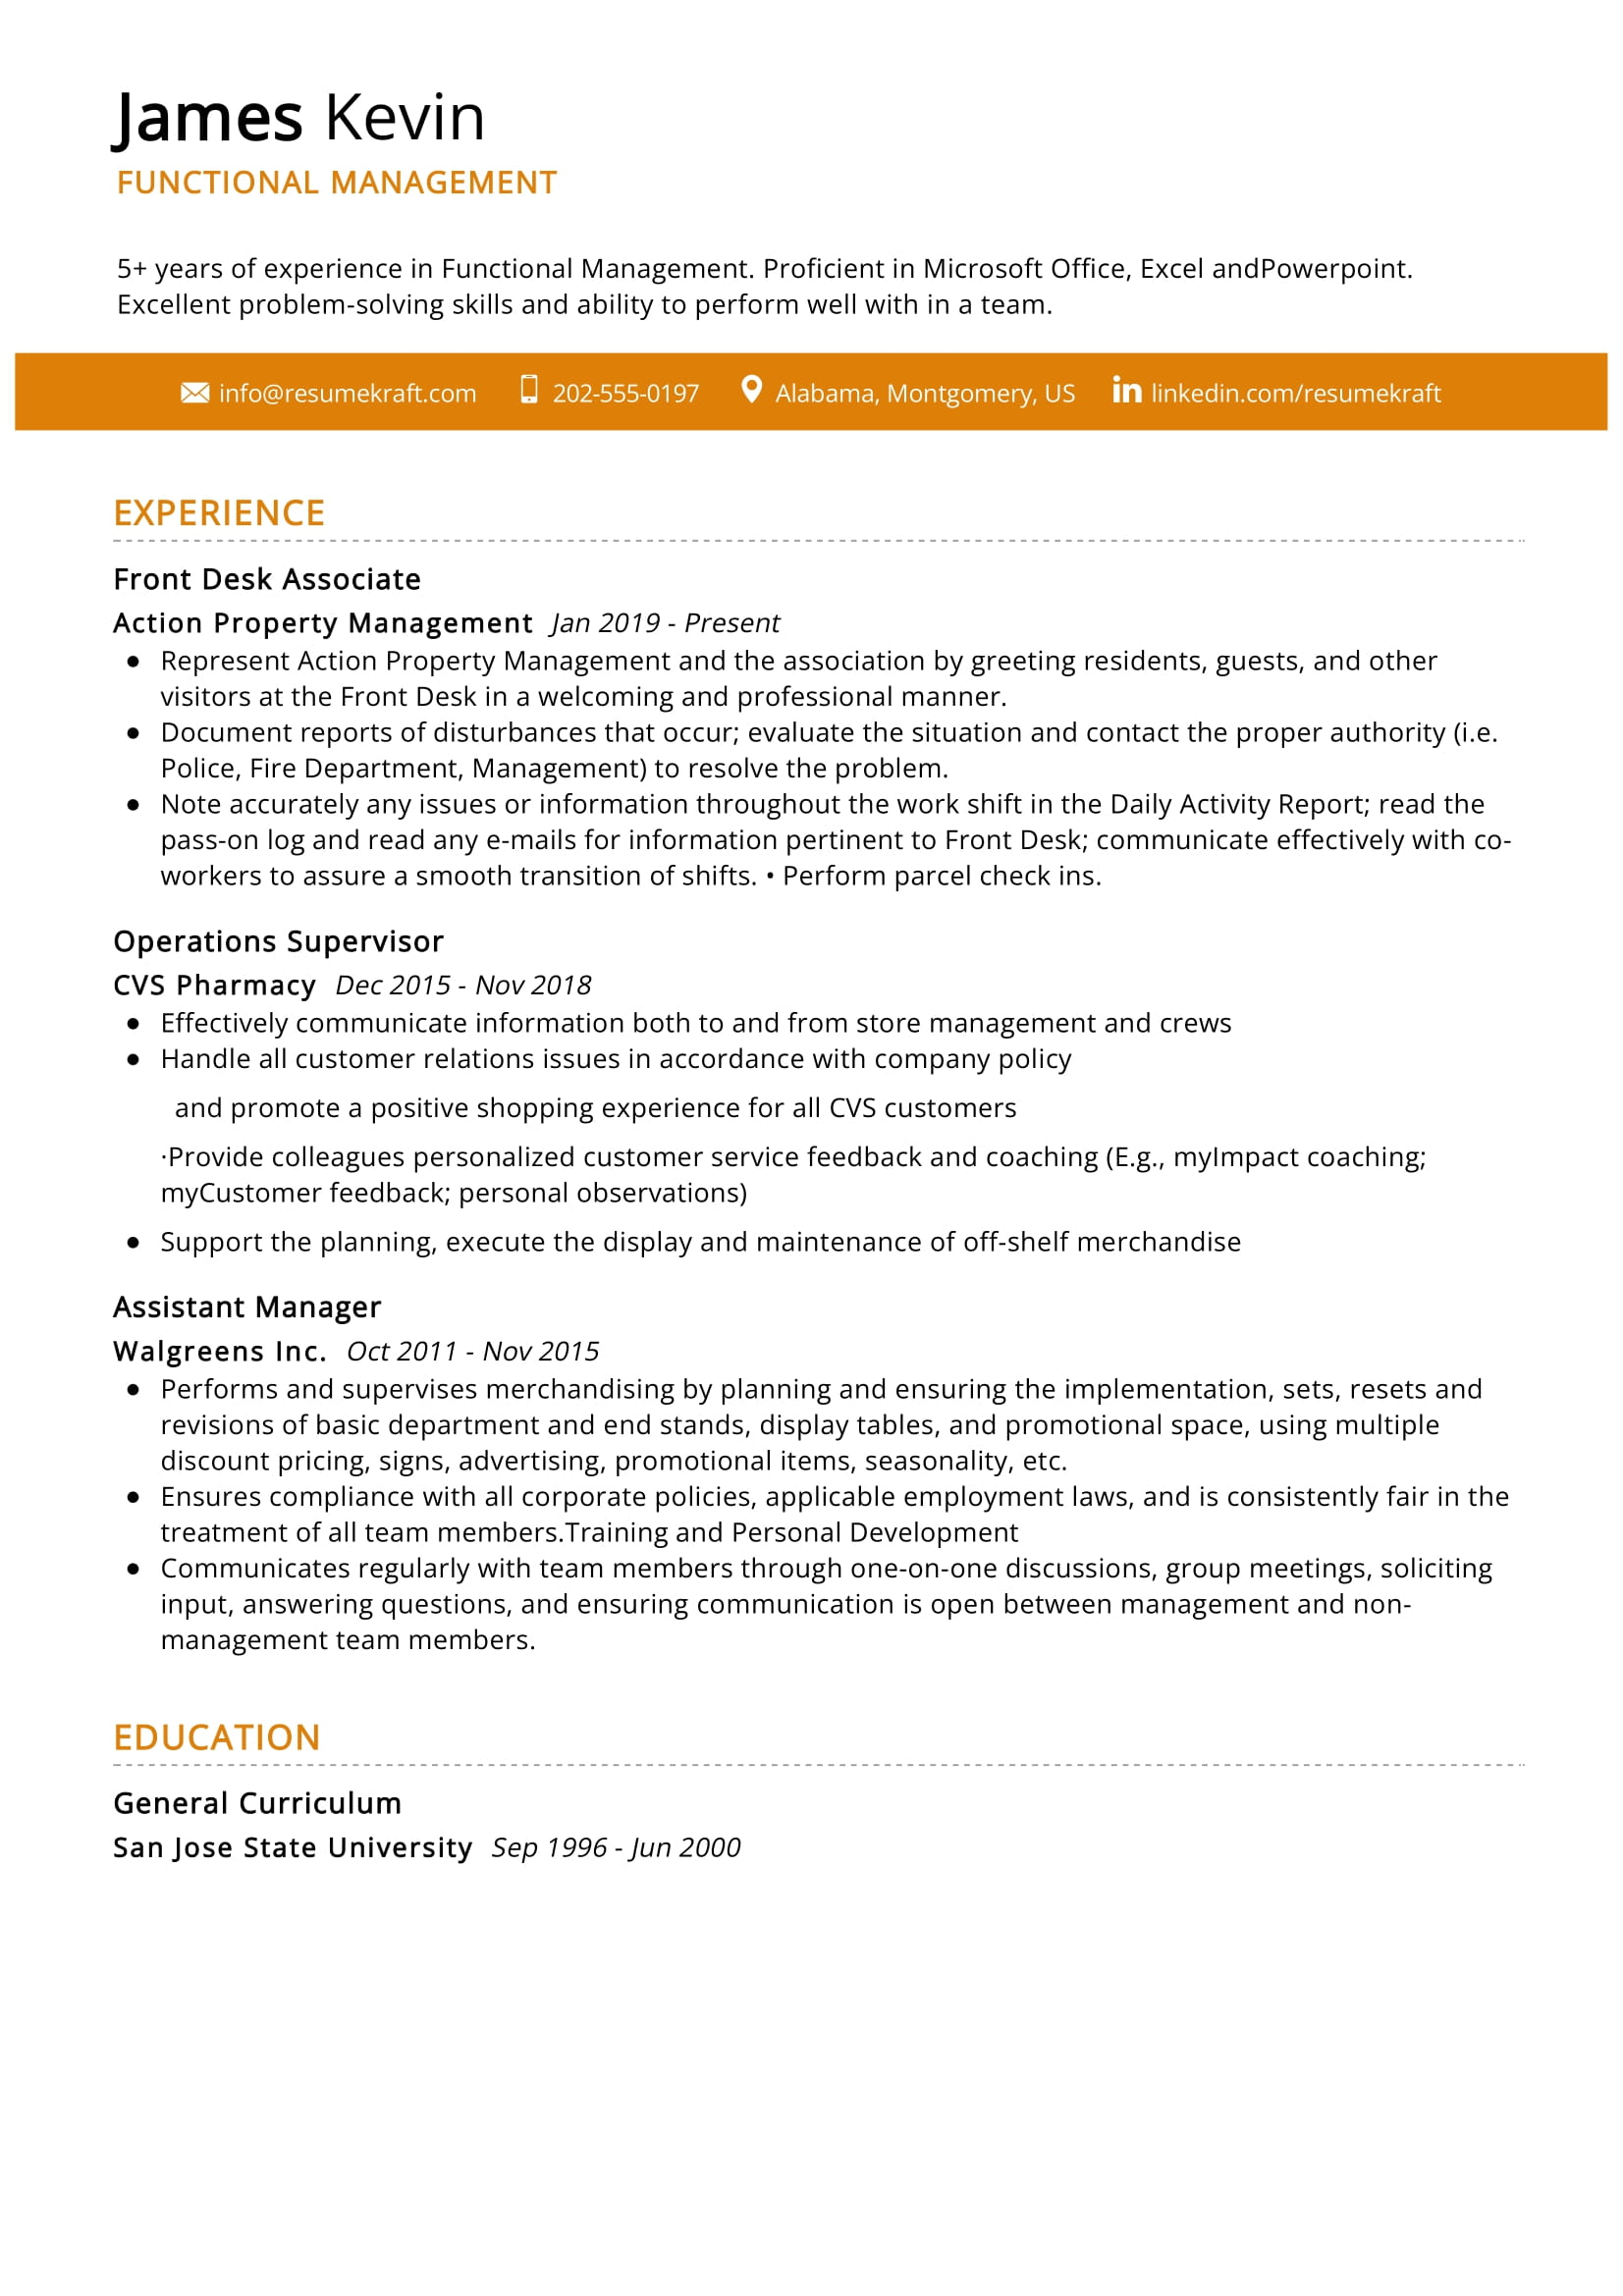 Functional-Management-Sample-Resume